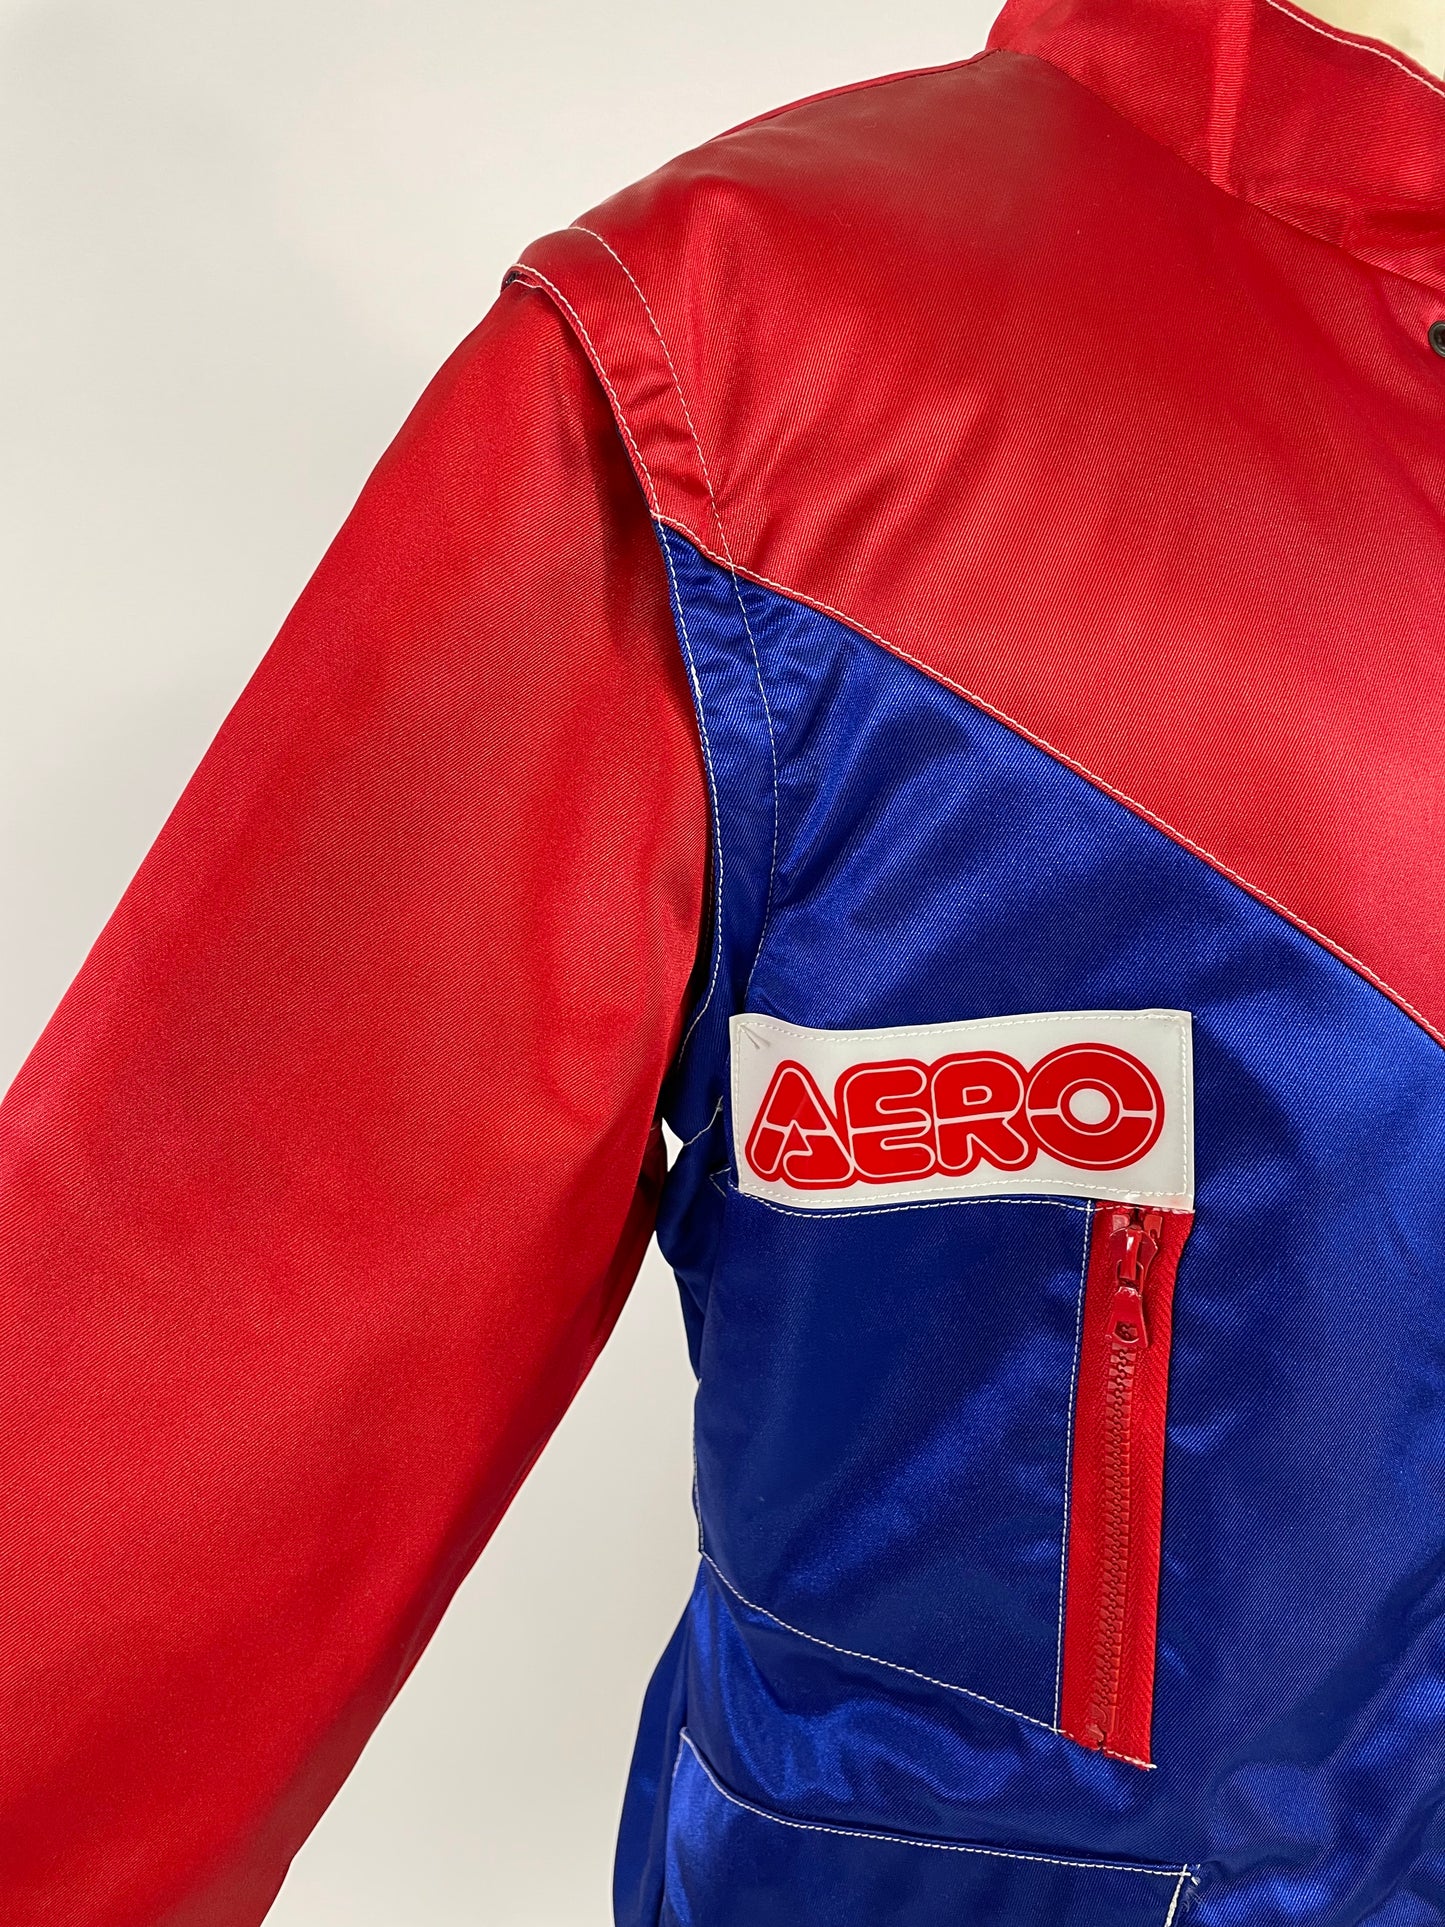 1980s Aerocross Jacket